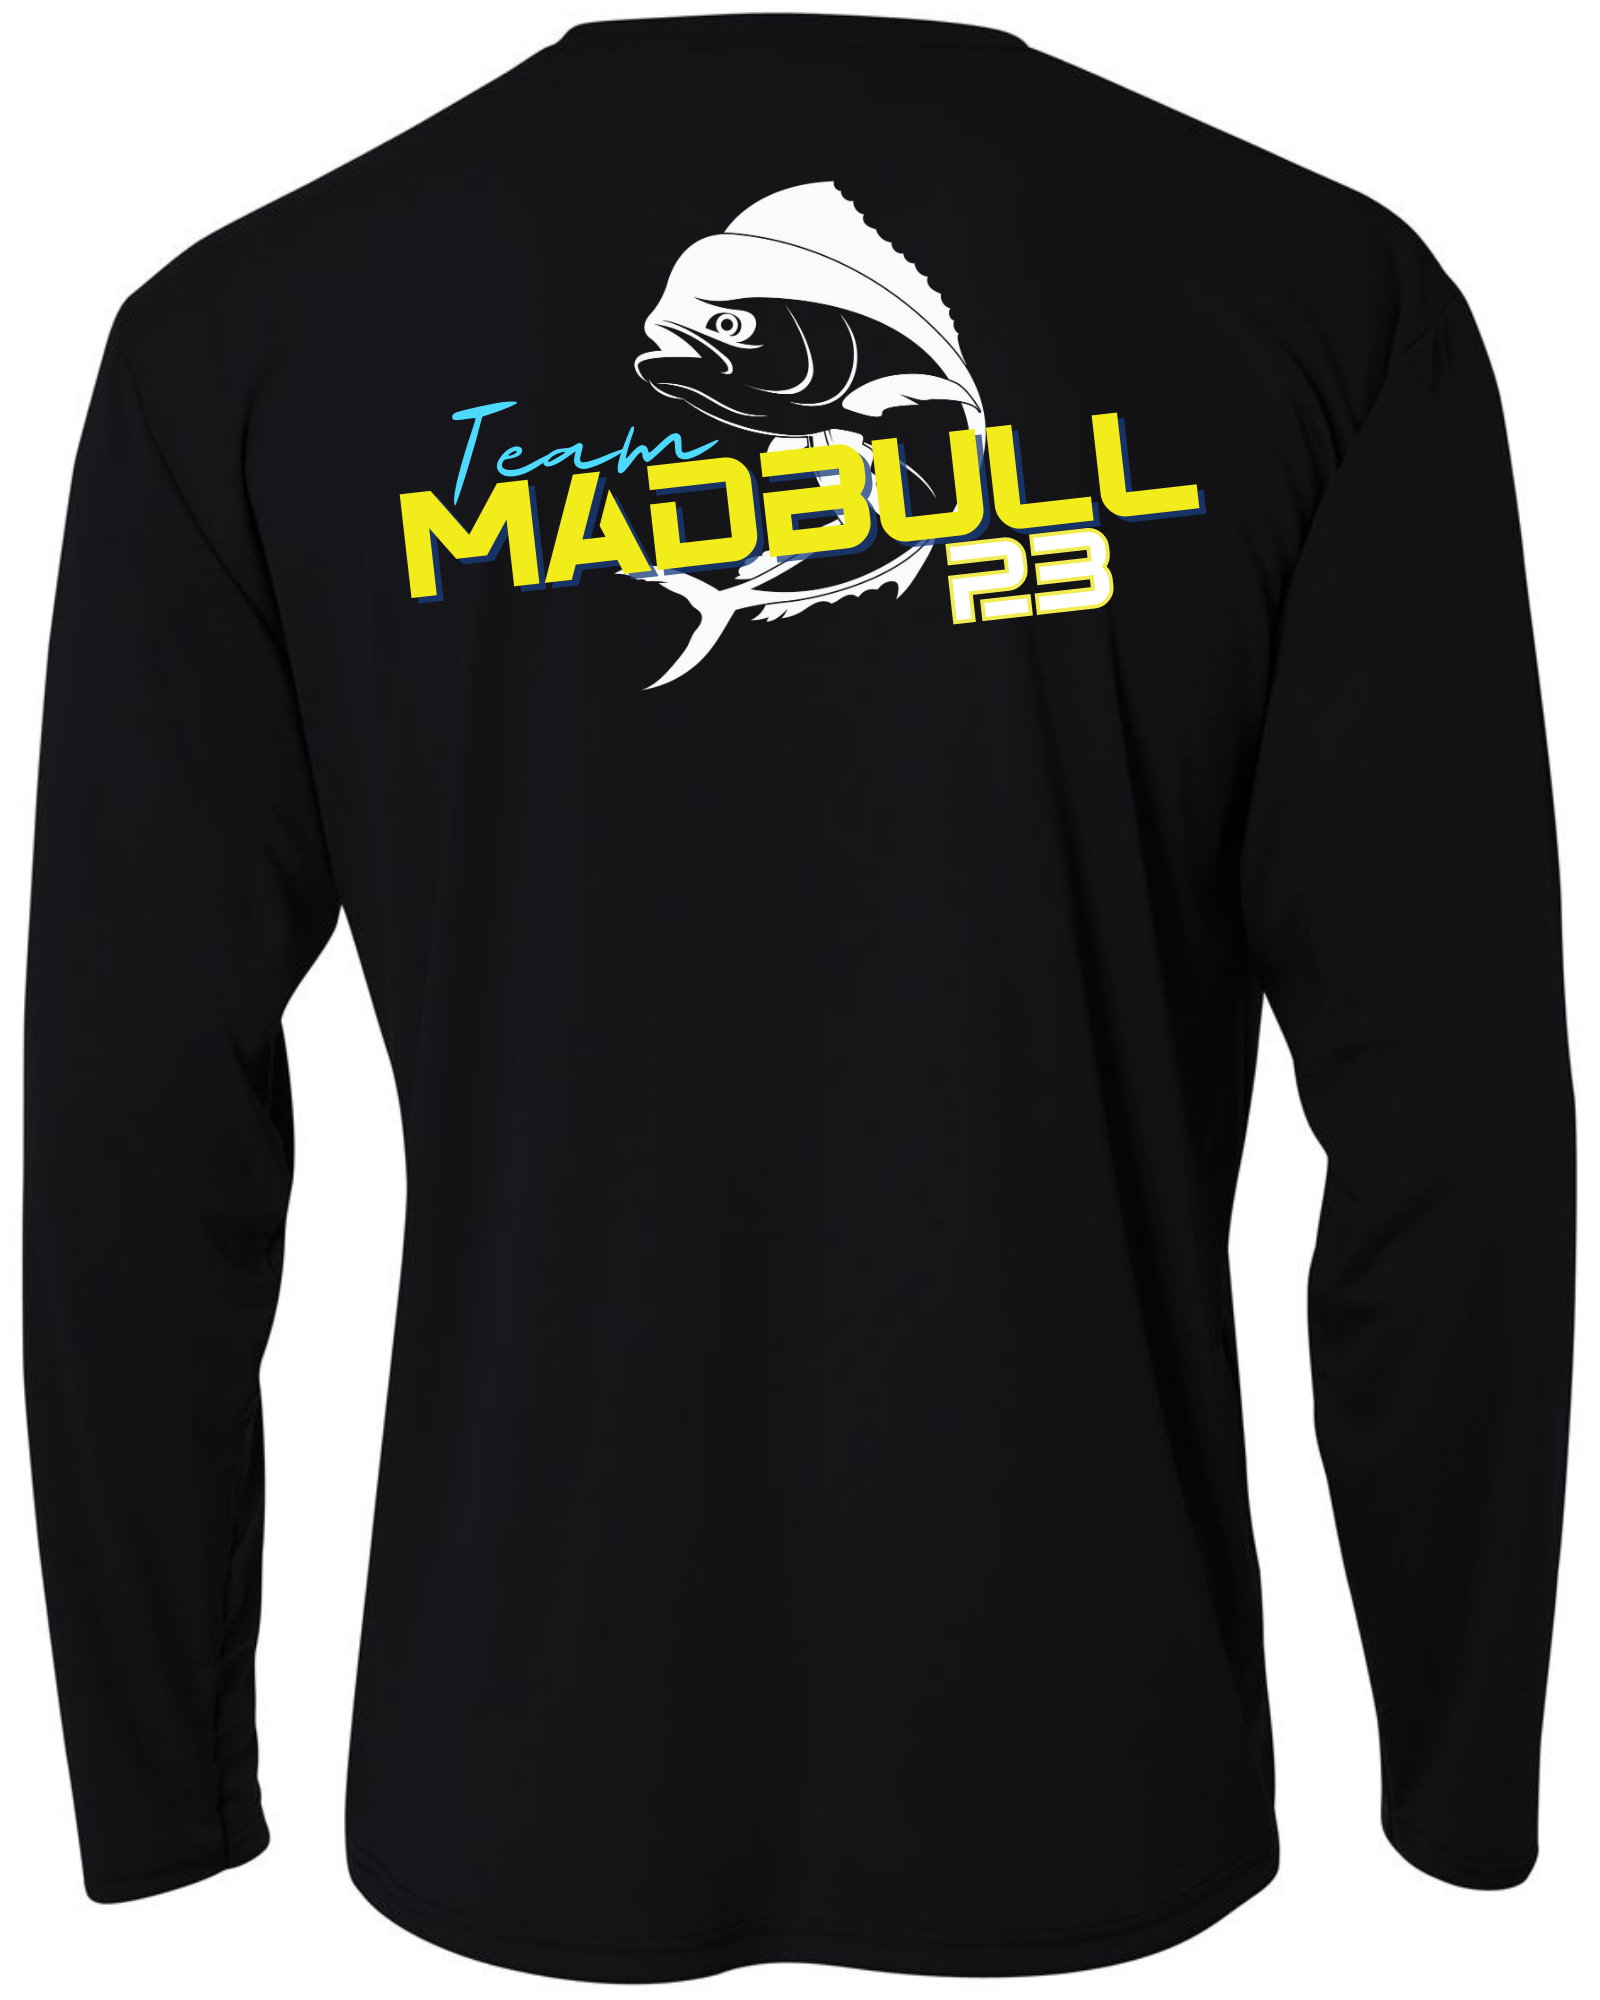 Team MadBull Performance Fishing Shirt – MadBull Offshore